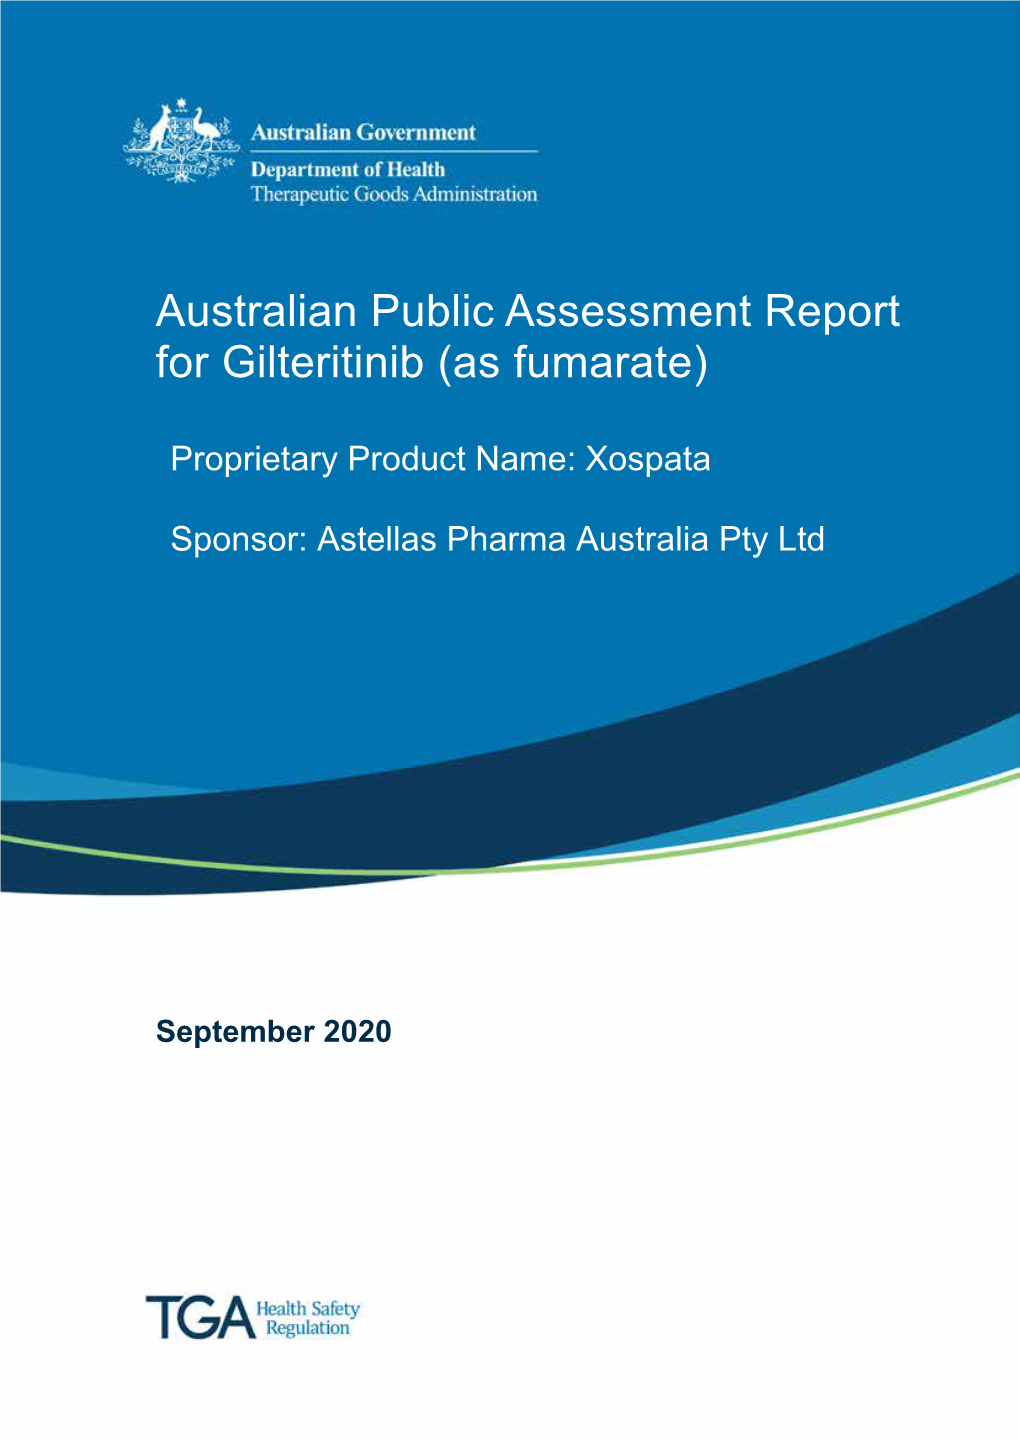 Australian Public Assessment Report for Gilteritinib (As Fumarate)